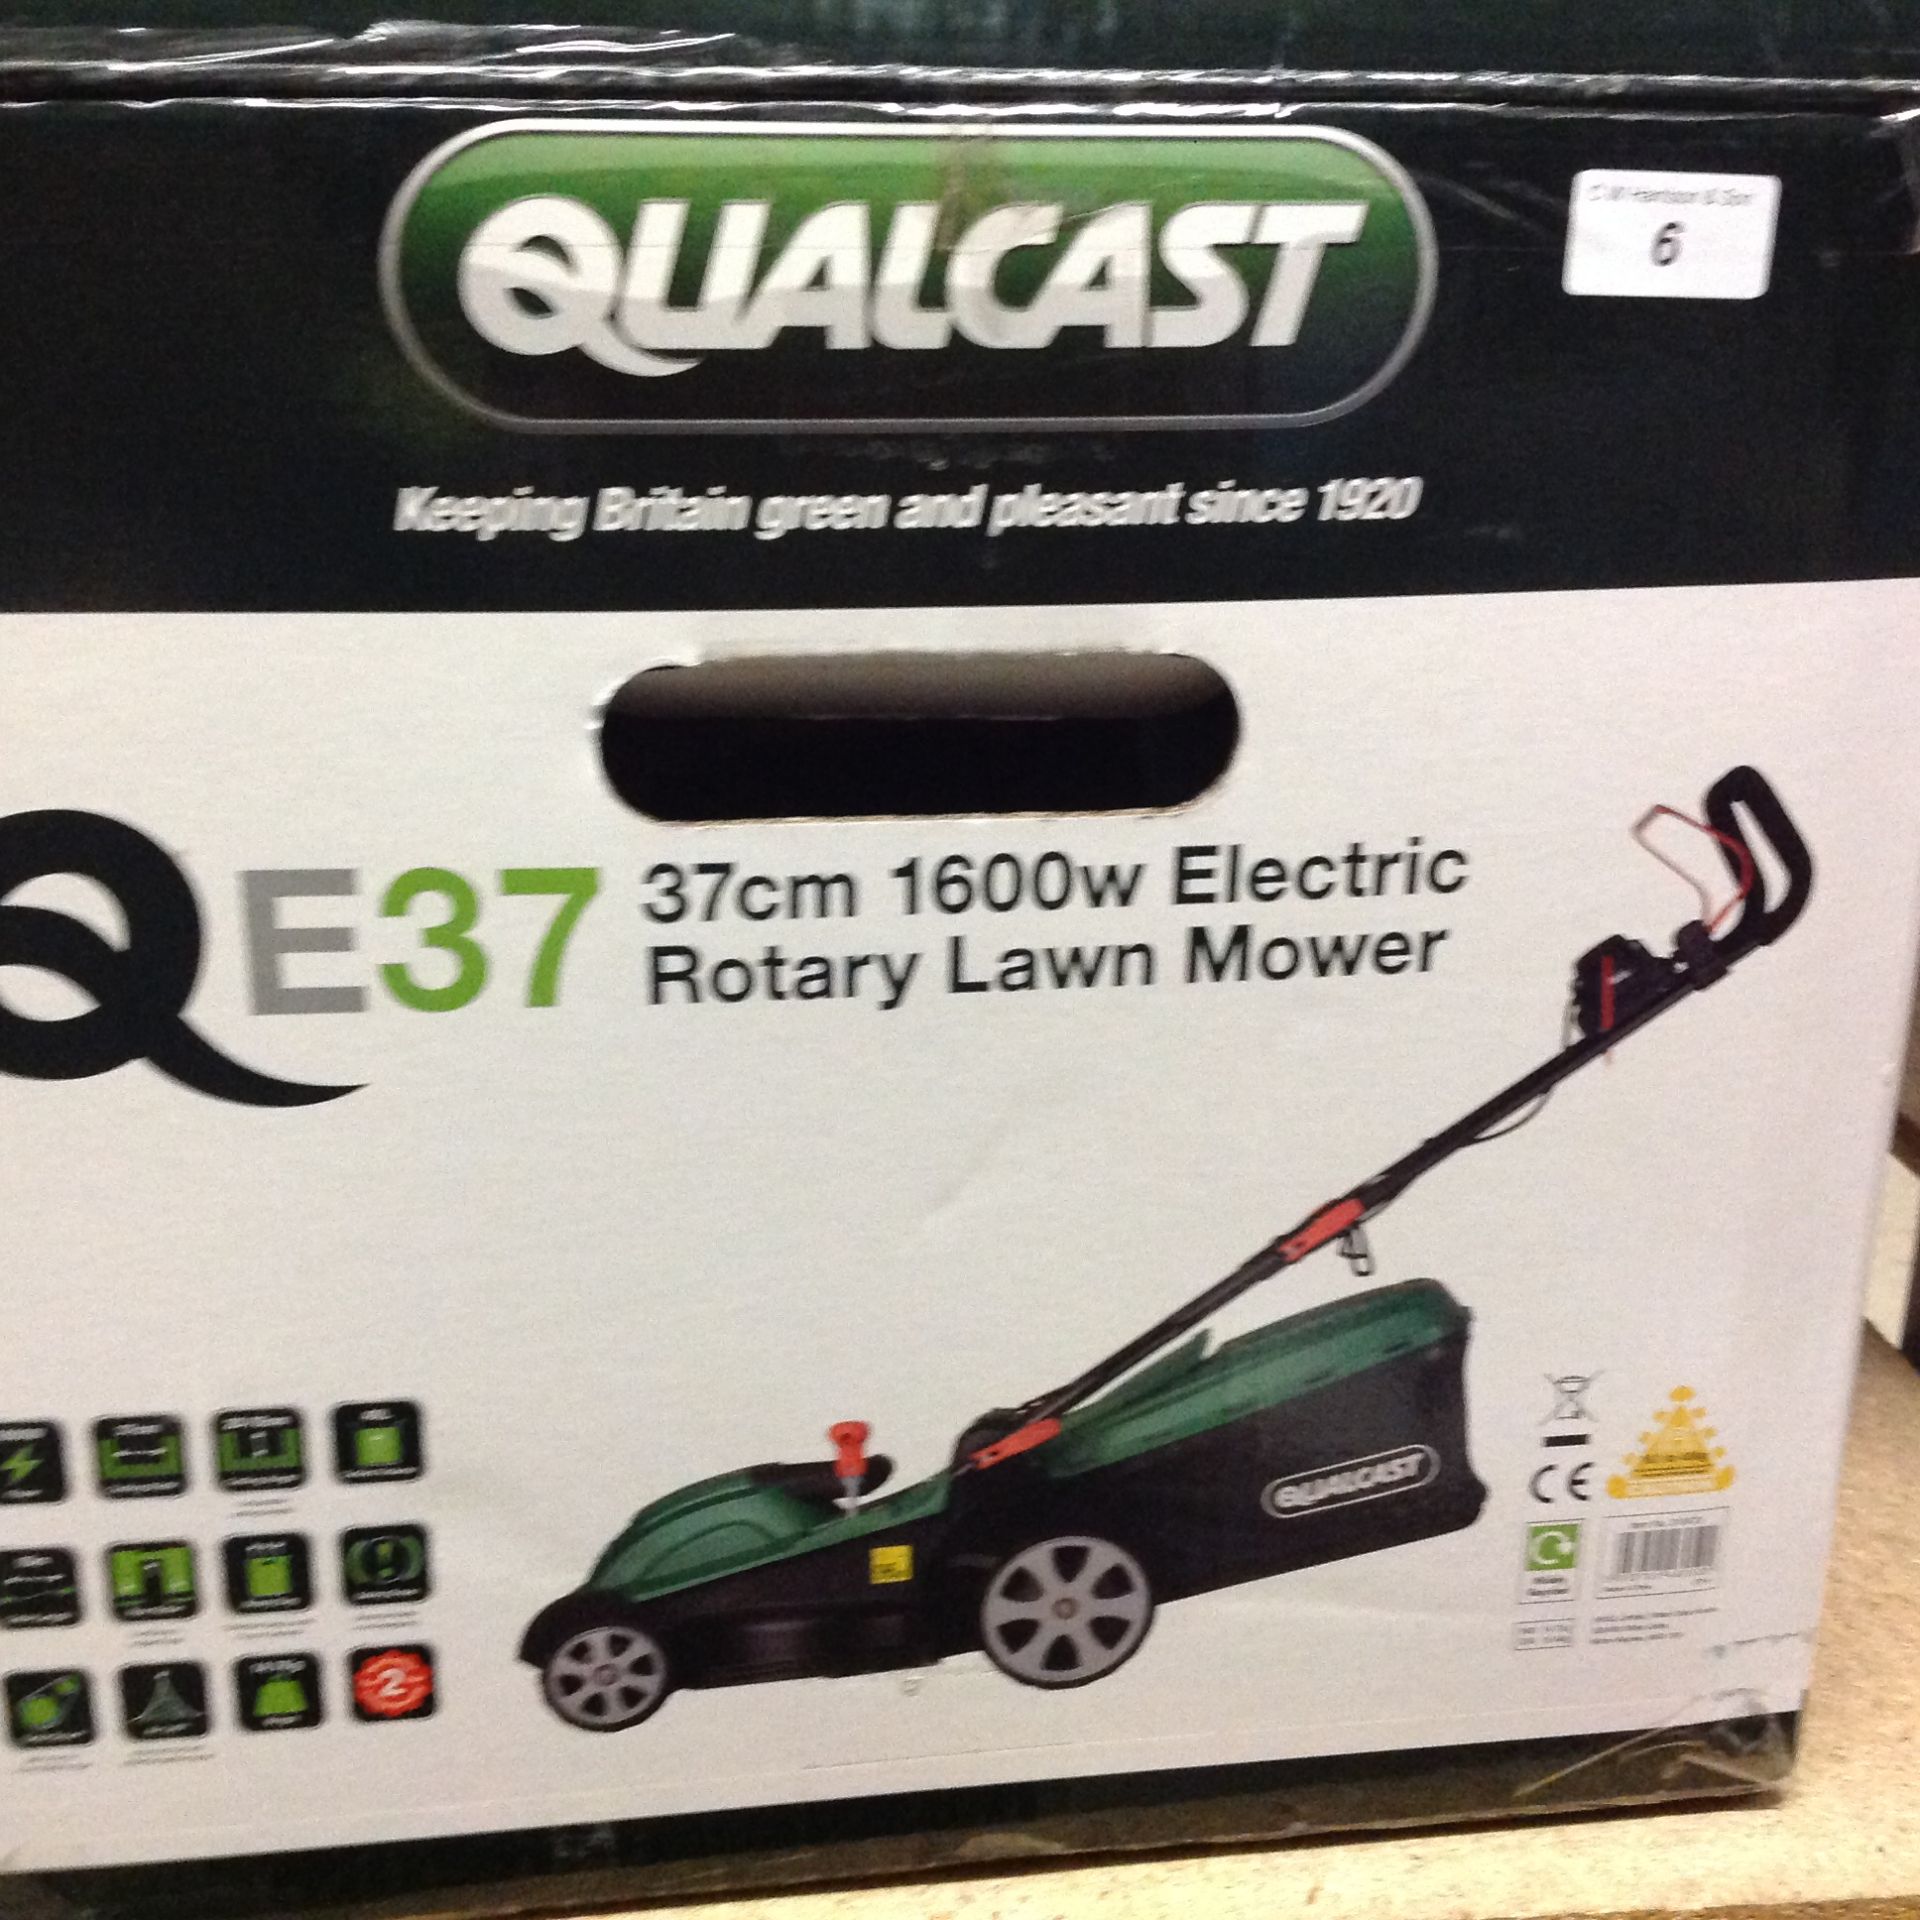 Qualcast QE37 37cm 1600w electric rotary lawn mower